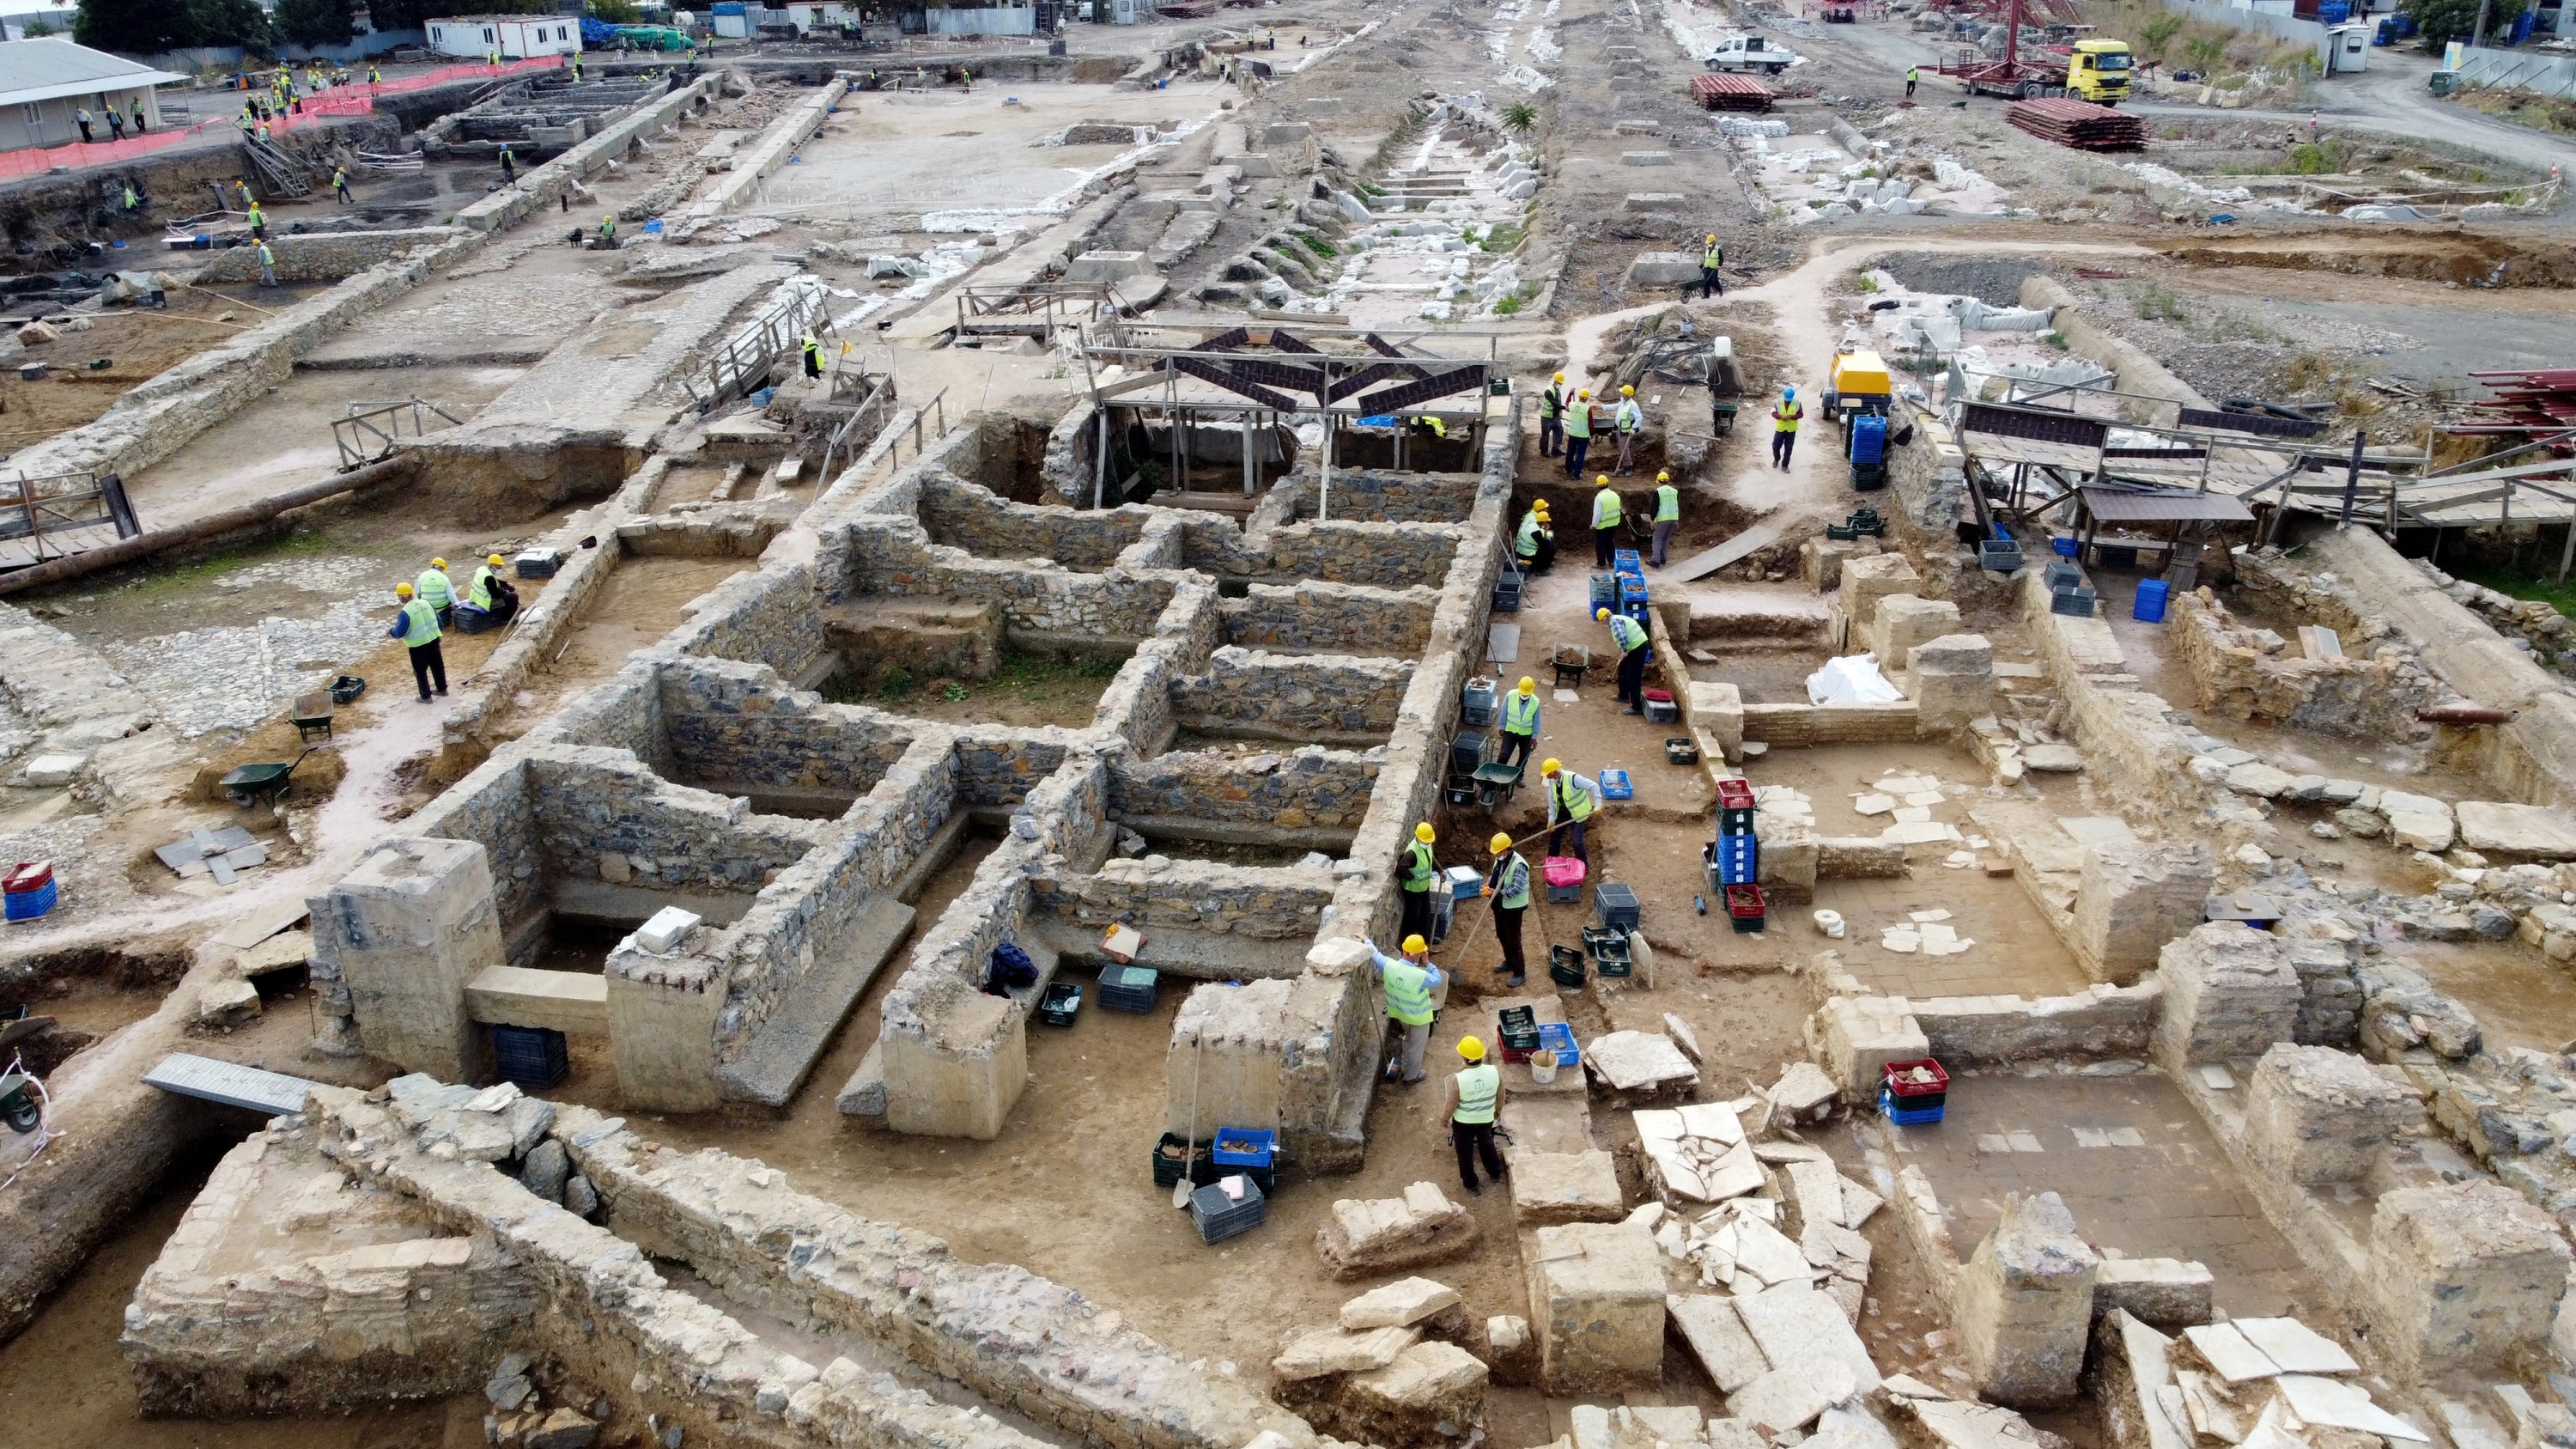 Archaeologists and staff work at the Haydarpaşa excavation area in Kadıköy, Istanbul, on Oct. 12, 2021. (AA Photo)